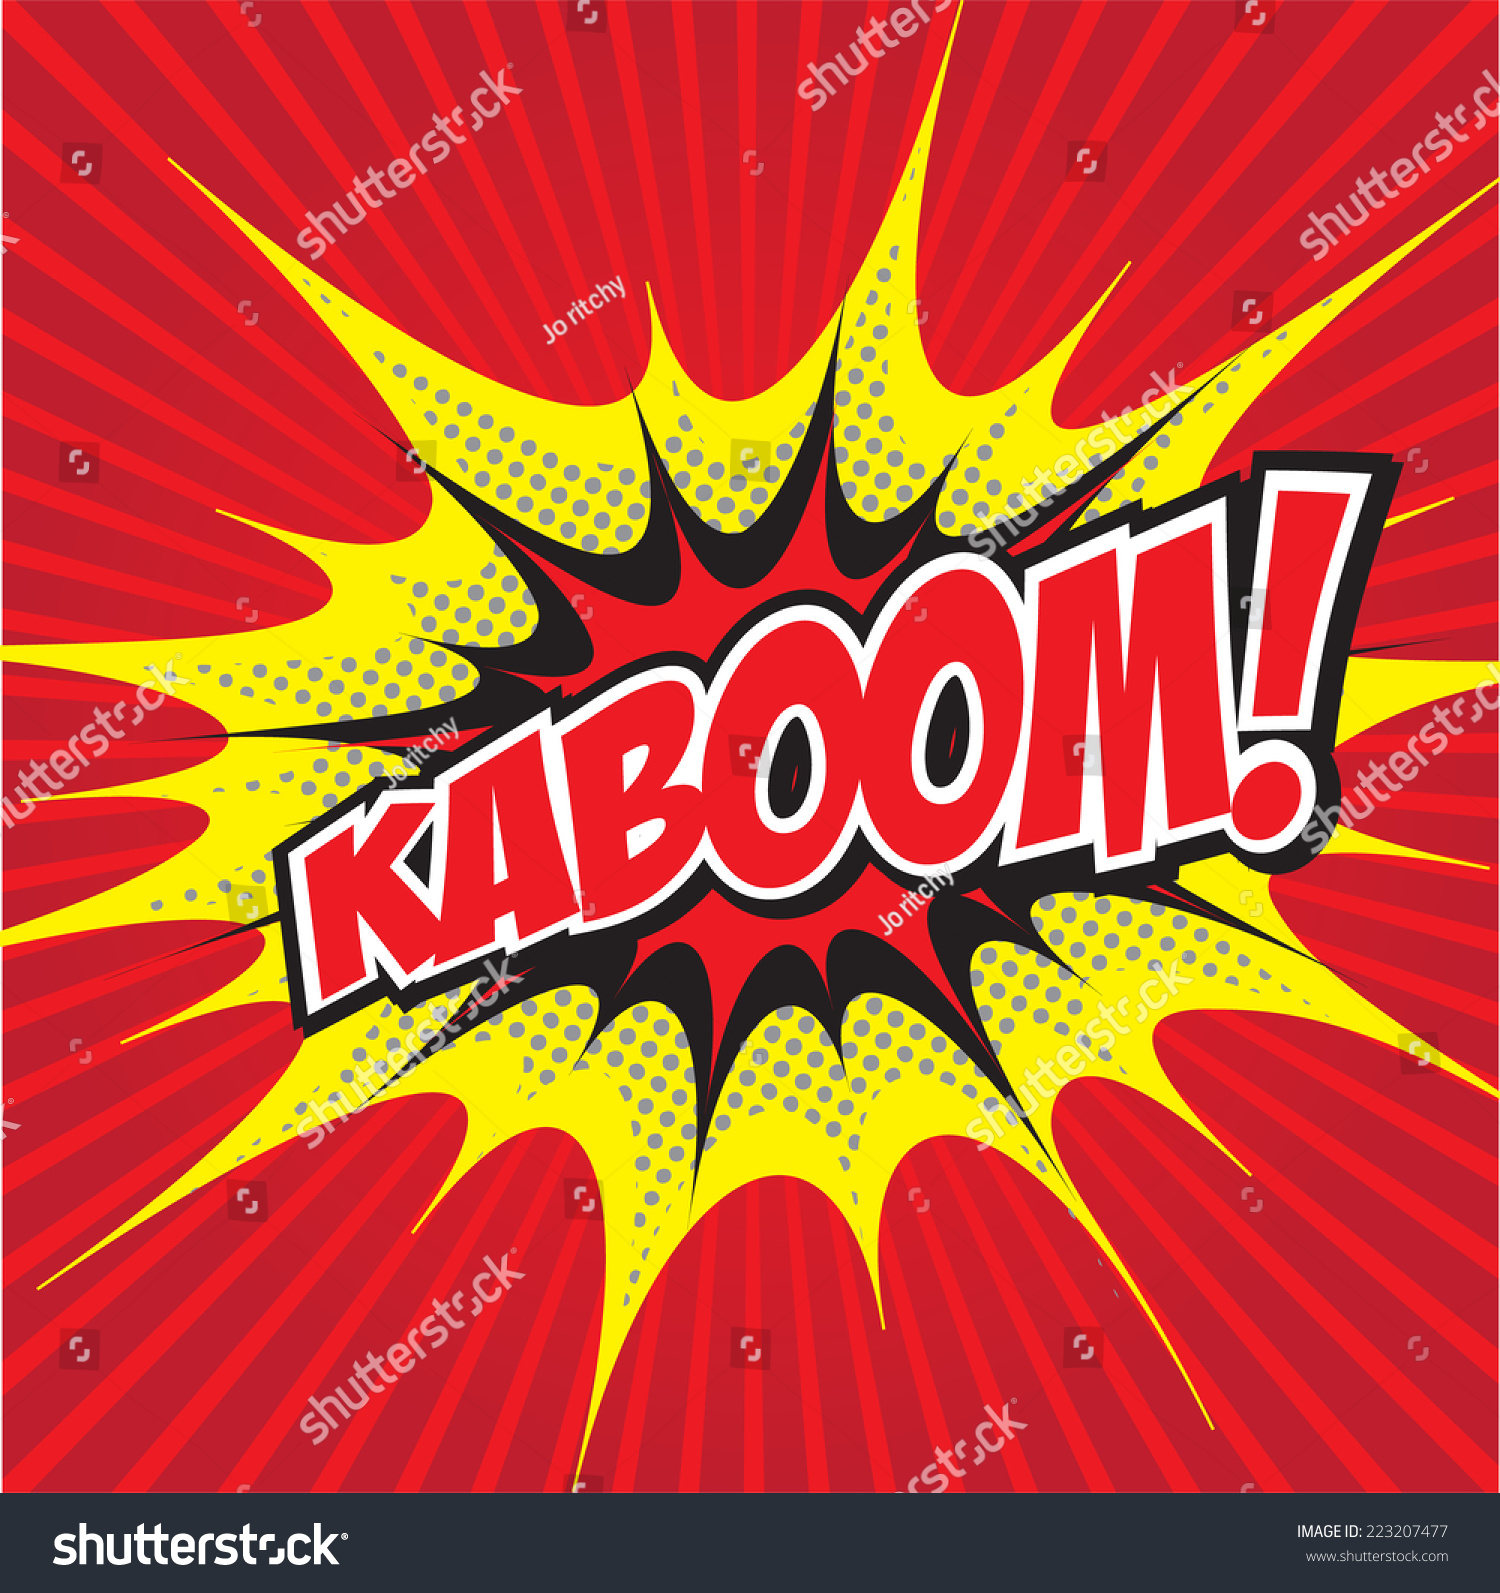 Kaboom Wording Ic Speech Bubble Pop Royalty Stock Image